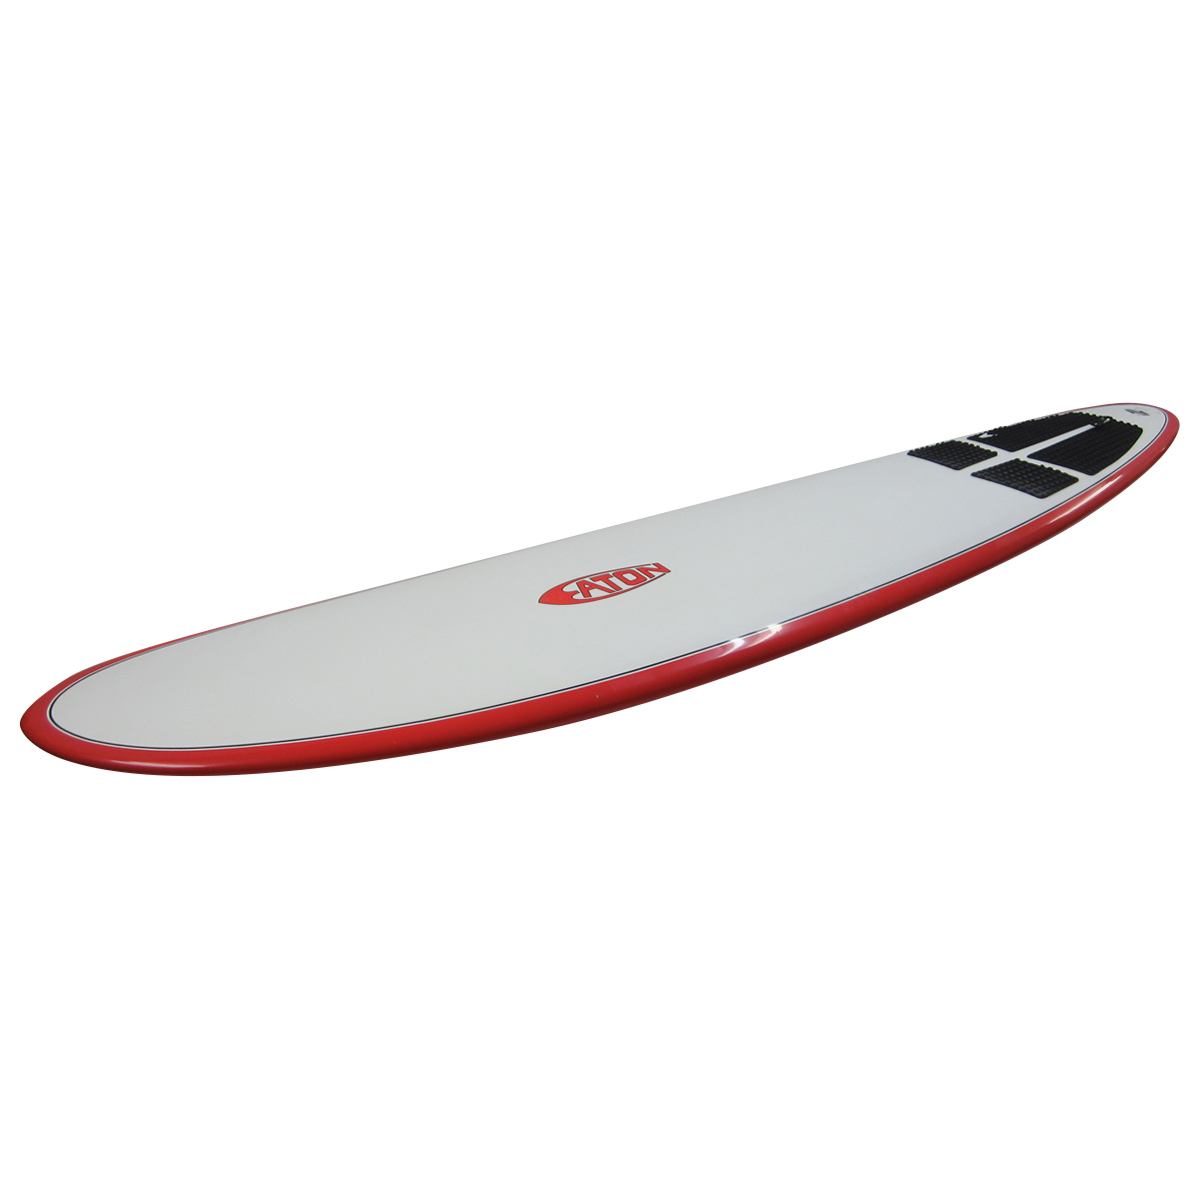 EATON SURFBOARDS / 9`0 Eaton Classic Bonzer Boardworks 